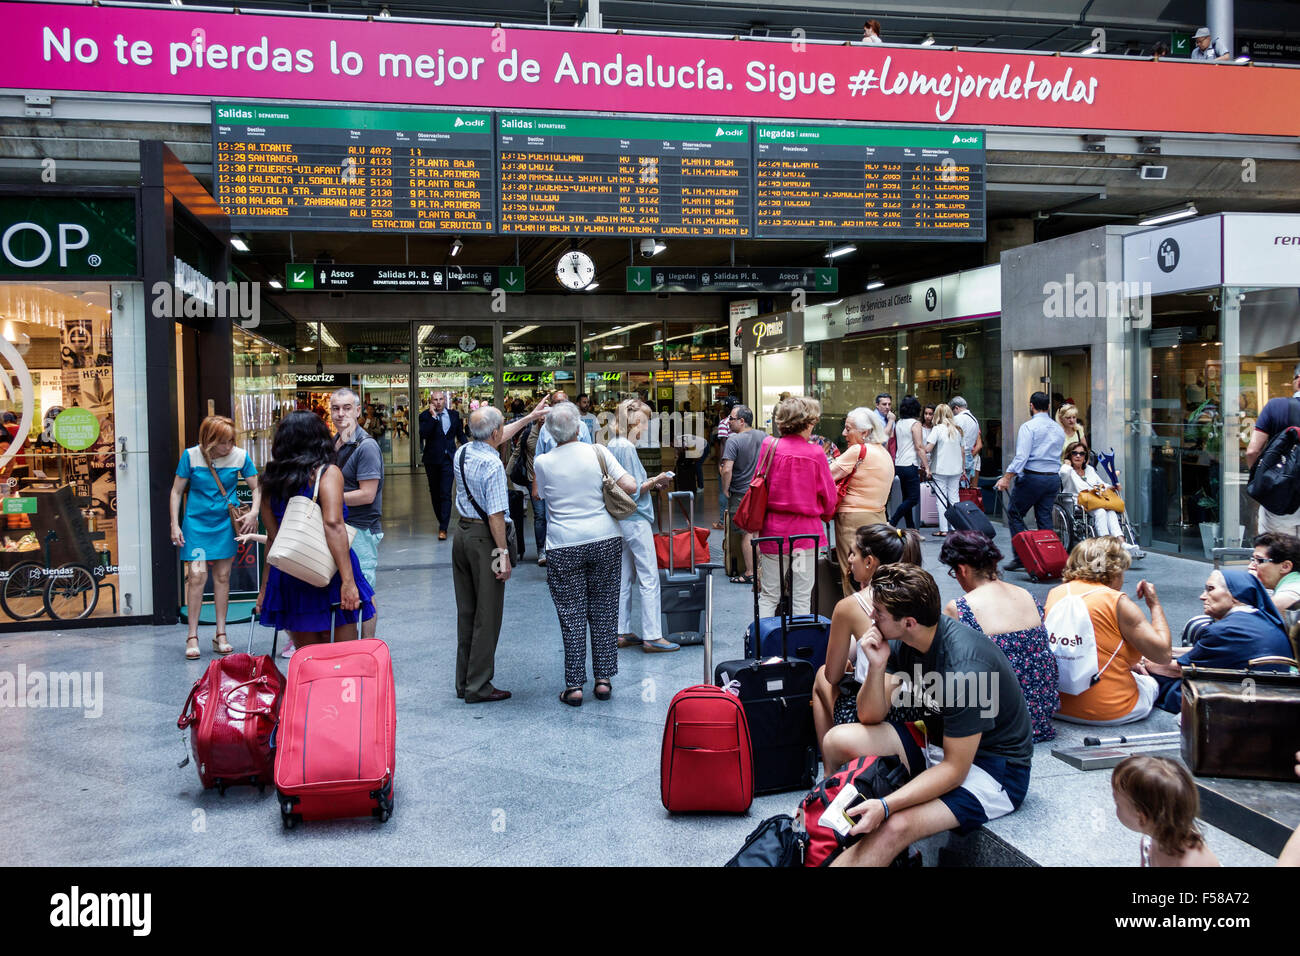 Madrid Spanien, Europa, Spanisch, lateinamerikanisch-lateinamerikanische Minderheit von Einwanderern, Arganzuela, Estacion de Madrid Atocha, Madrid Puerta de Atocha, ra Stockfoto